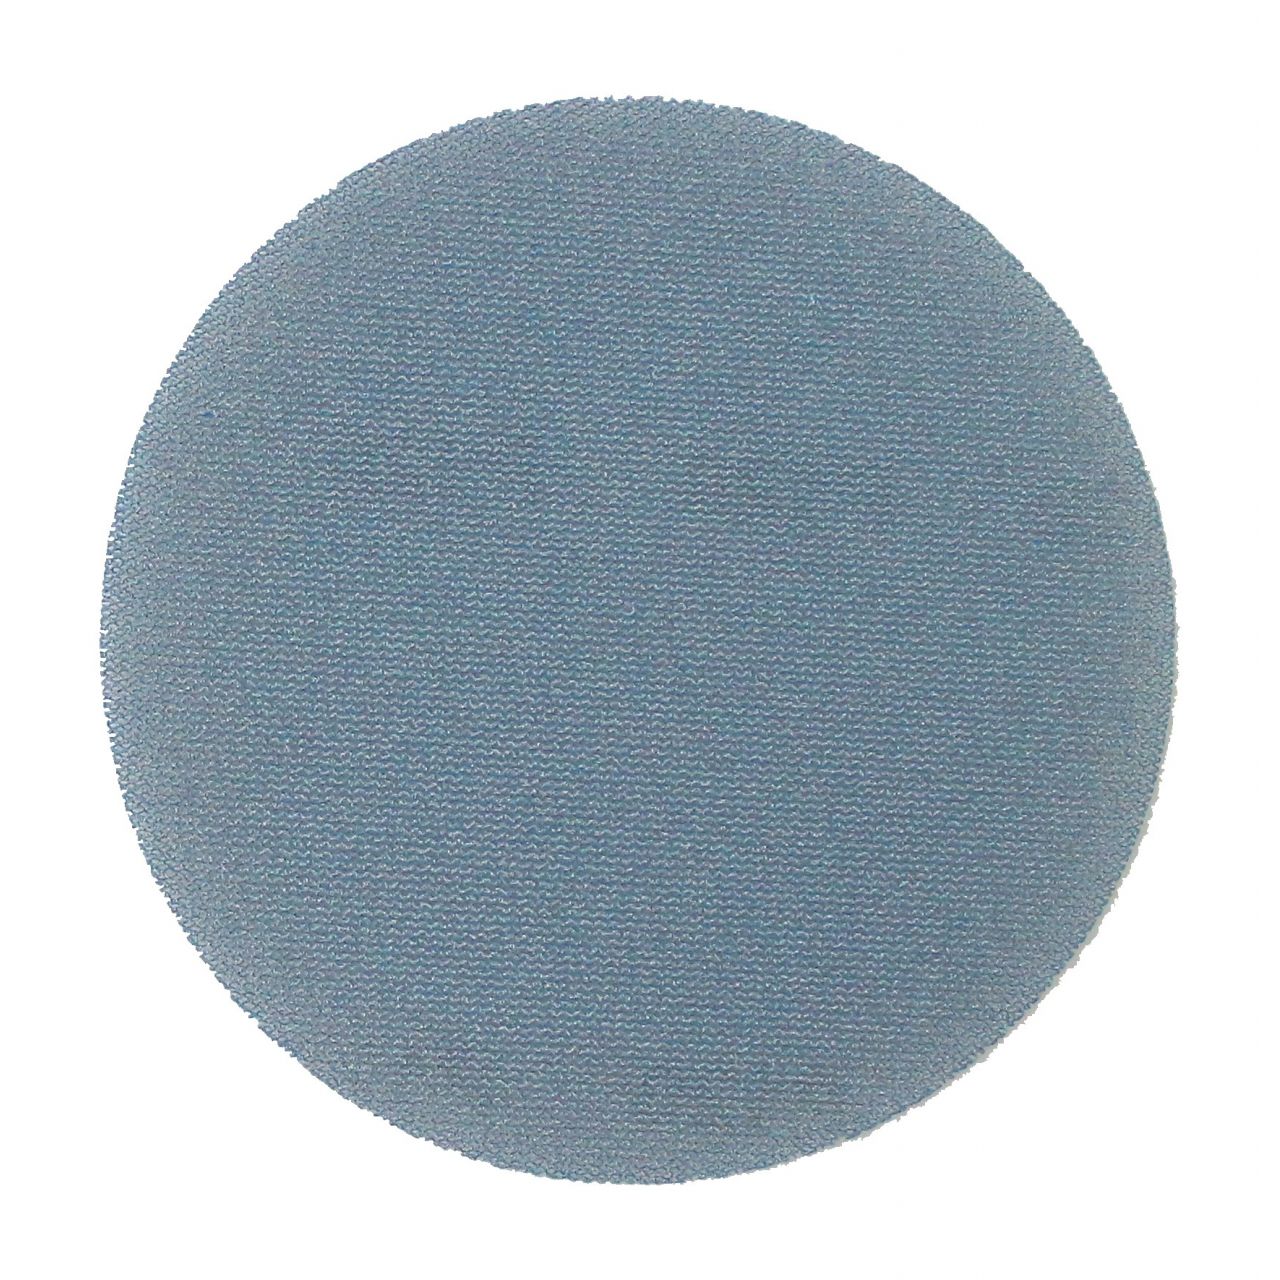 50 Discos de malla abrasiva autoadherente azul MAB (125/180)